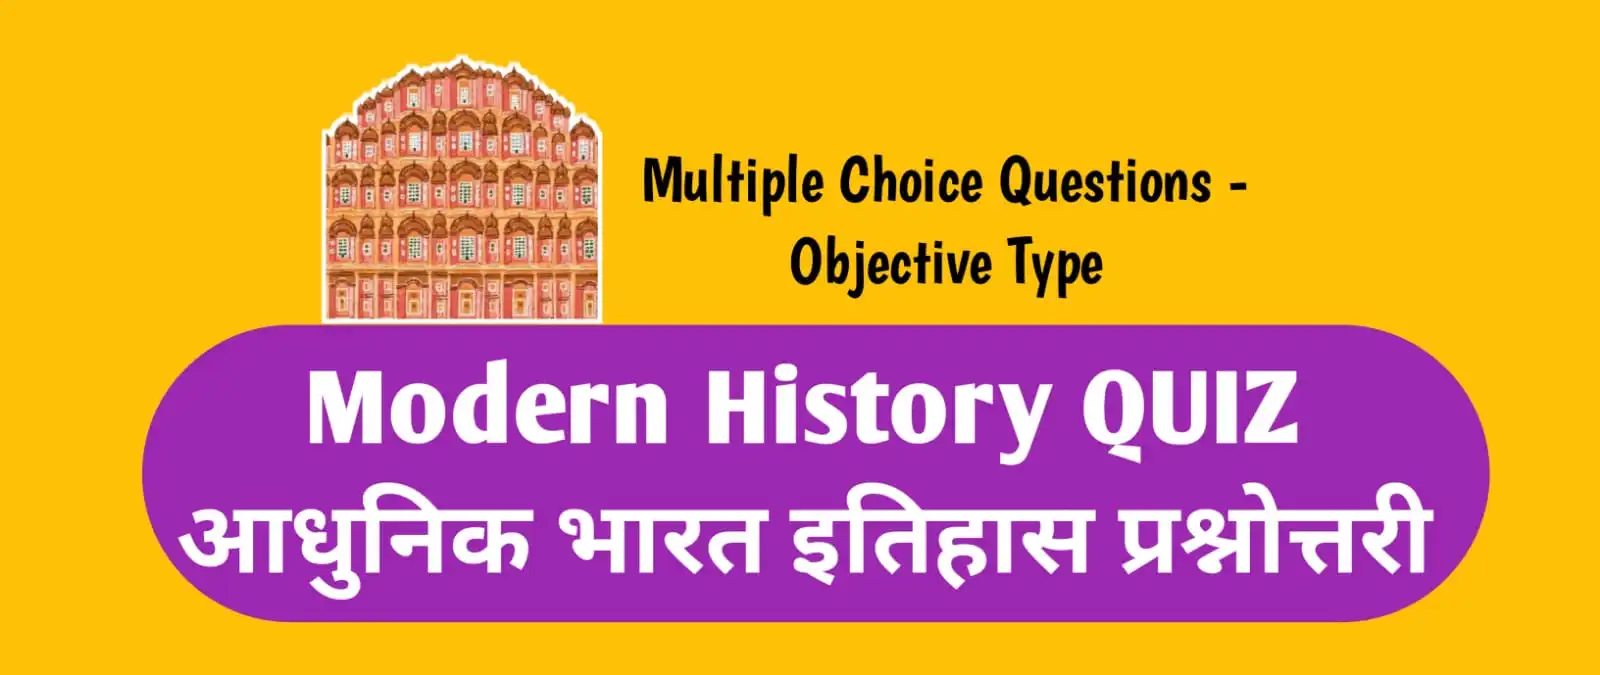 Modern History Quiz